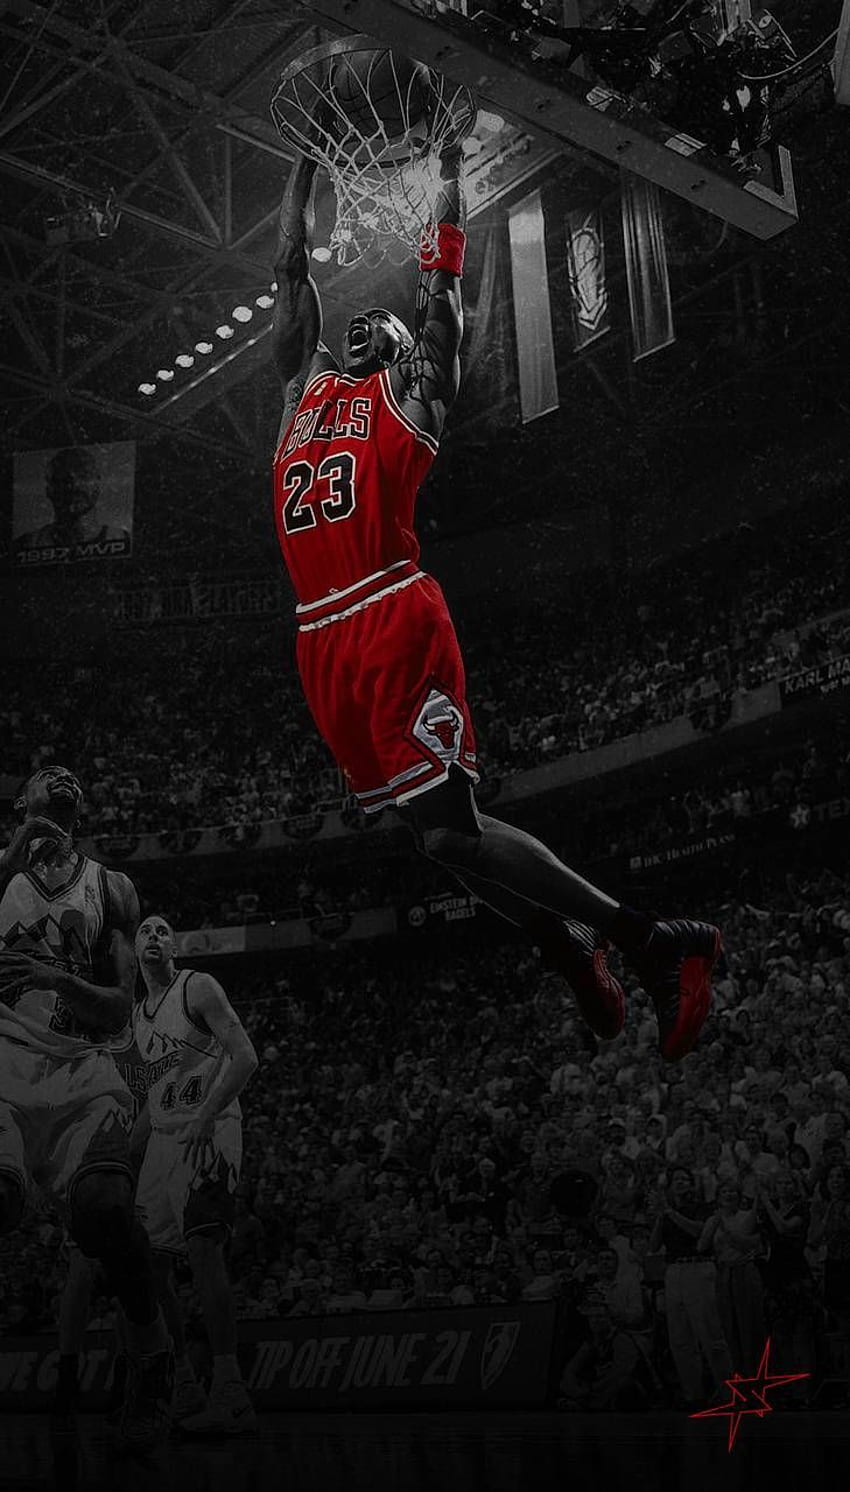 Michael Jordan Wallpaper Dunk 64 pictures